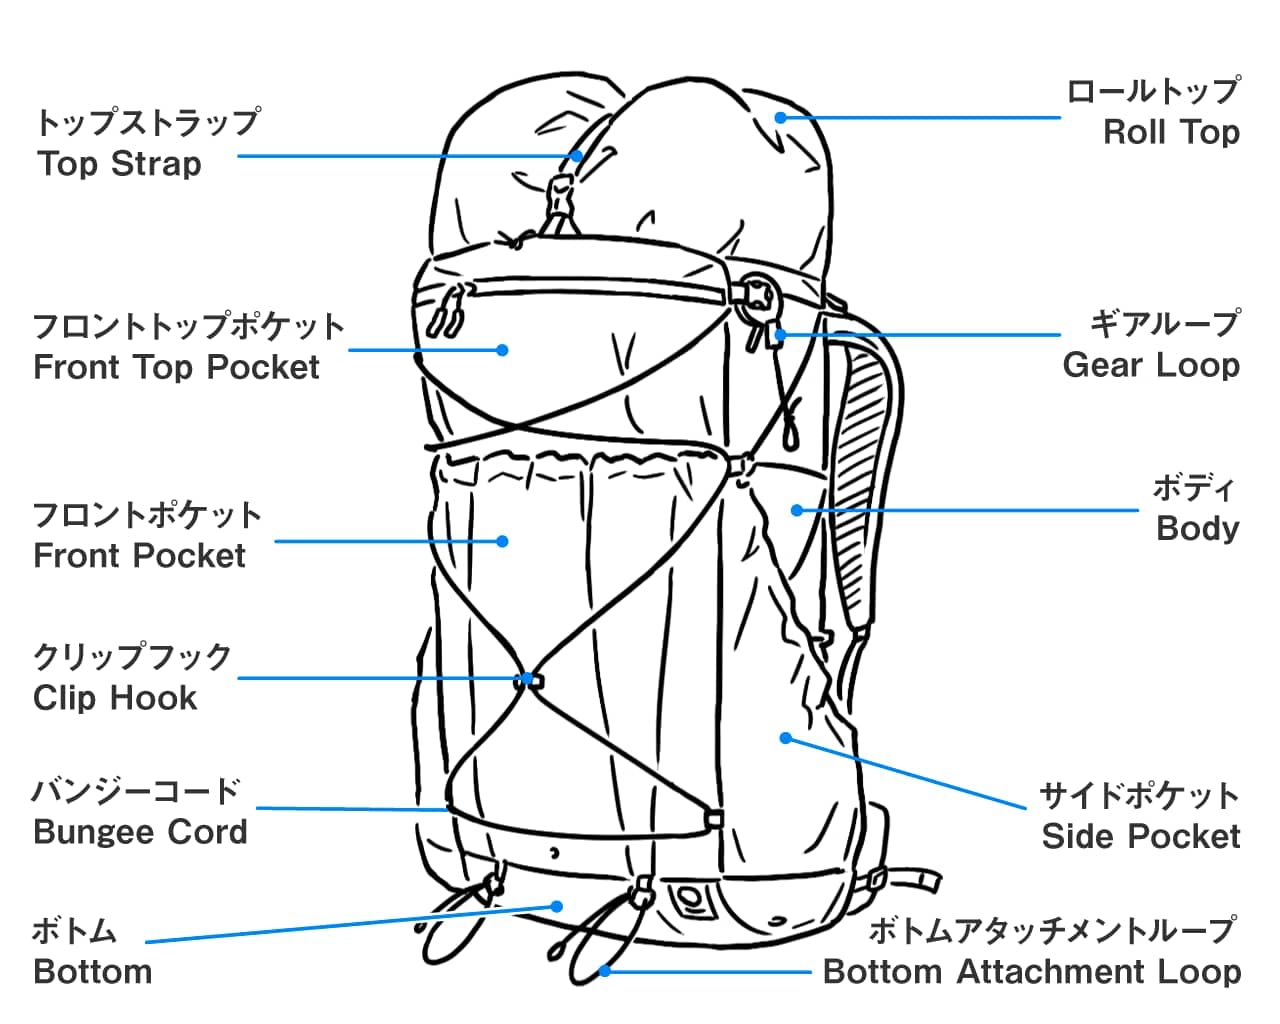 yamatomichi Backpack One